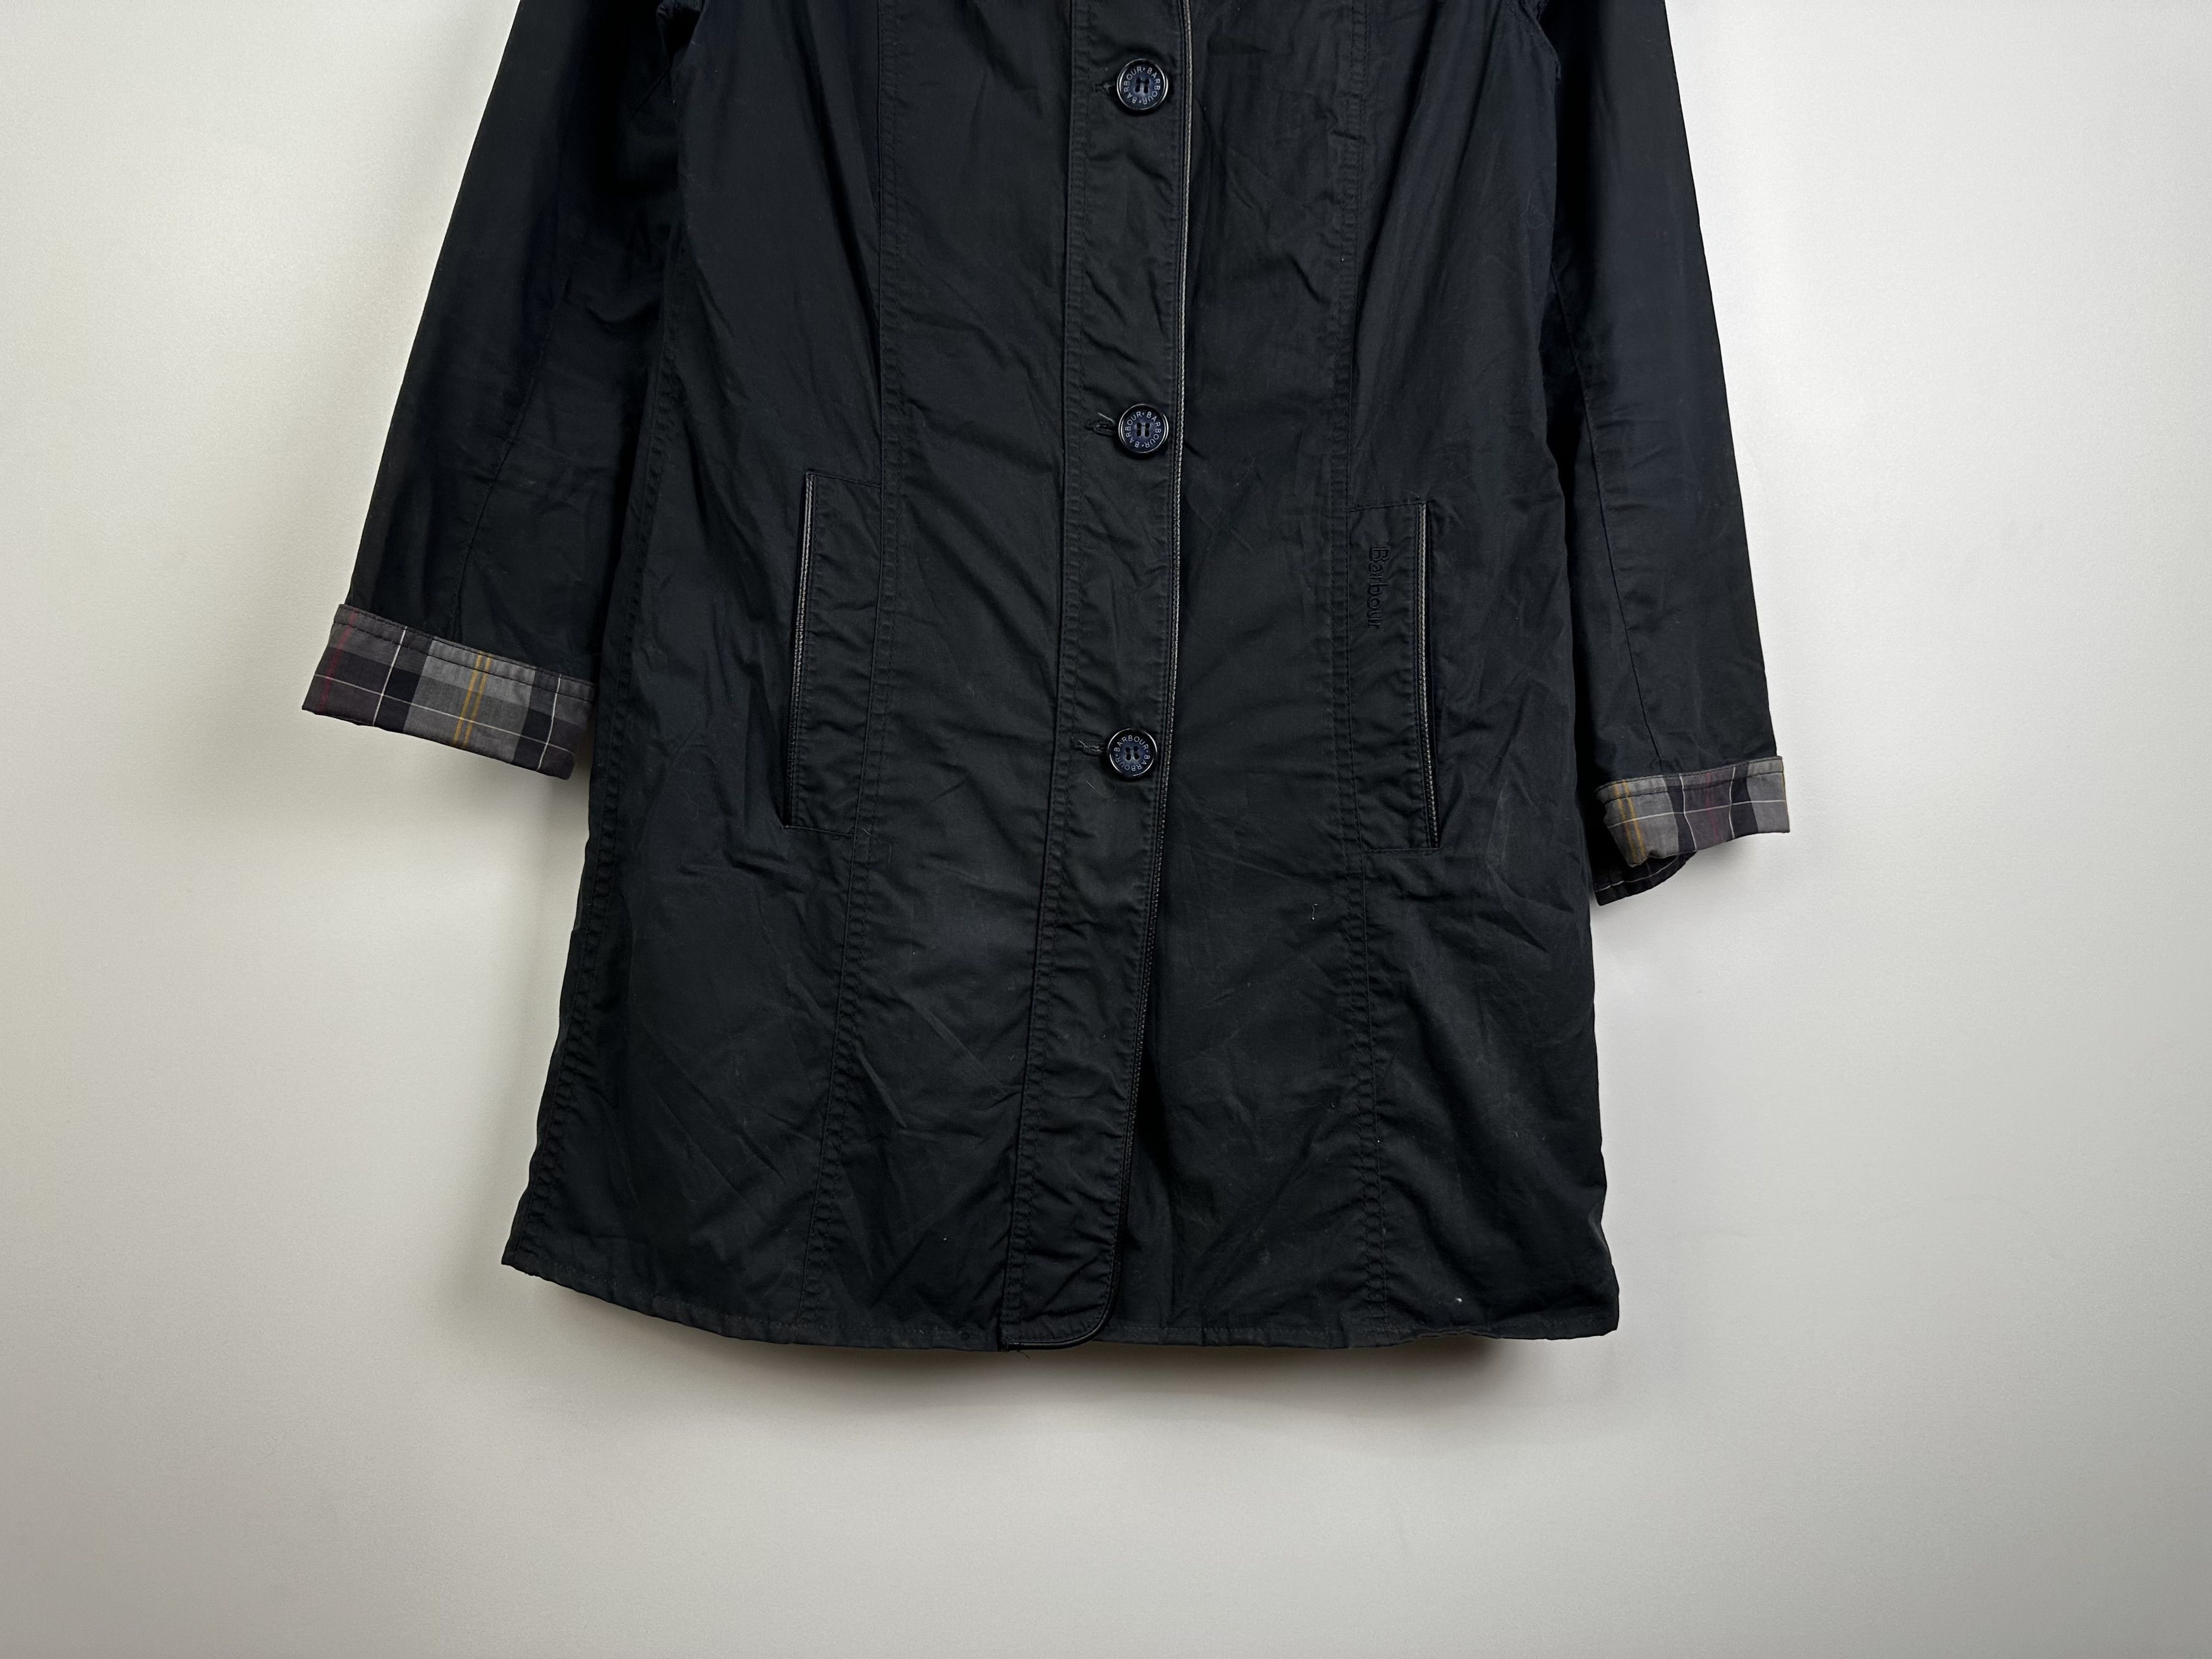 Barbour Women’s Barbour Grasmoor Waxed Jacket Coat Black Size US4 Size S / US 4 / IT 40 - 3 Thumbnail